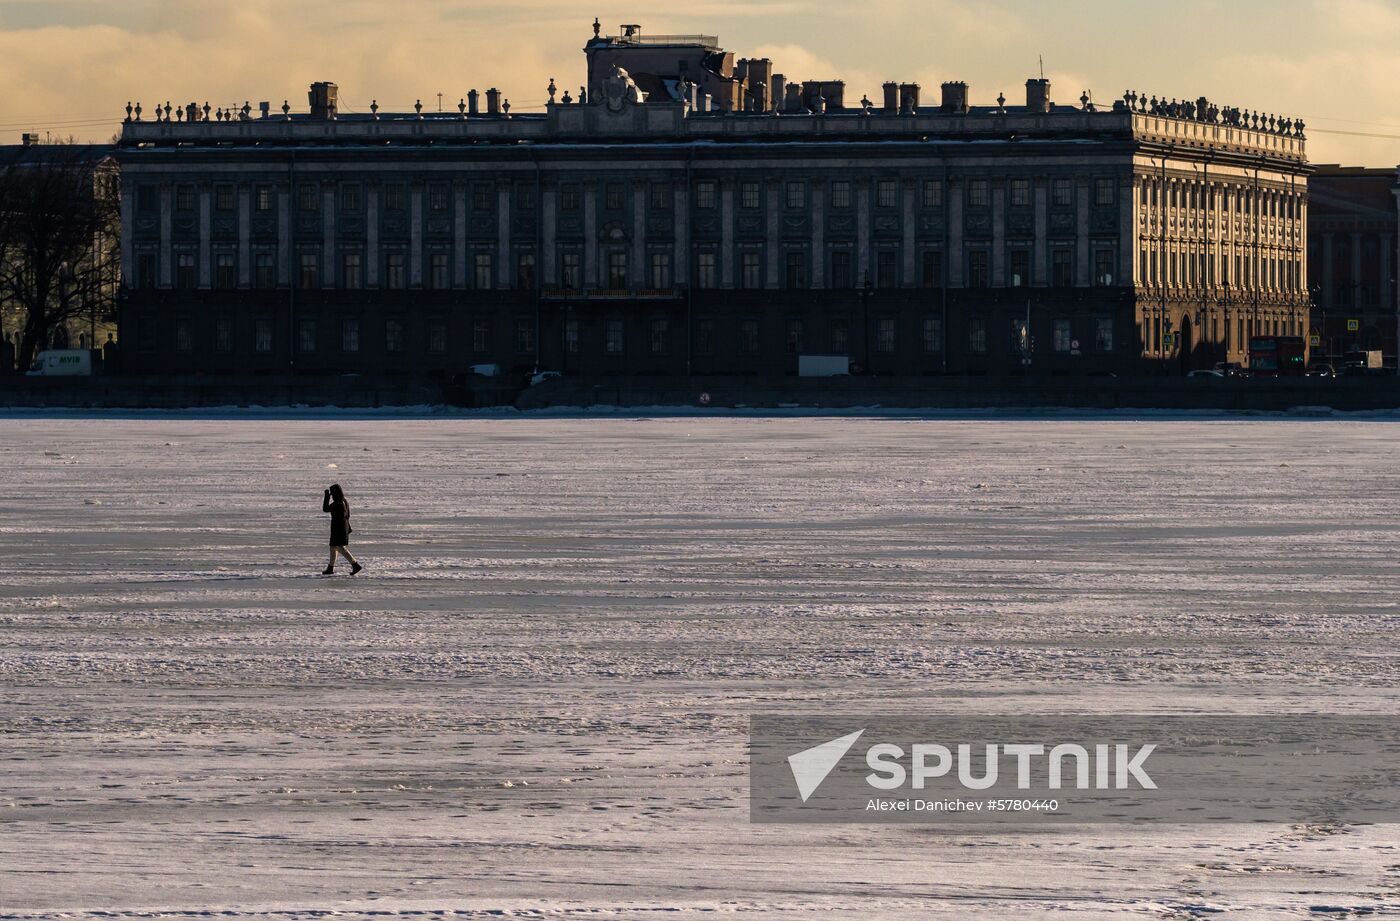 Russia Saint Petersburg